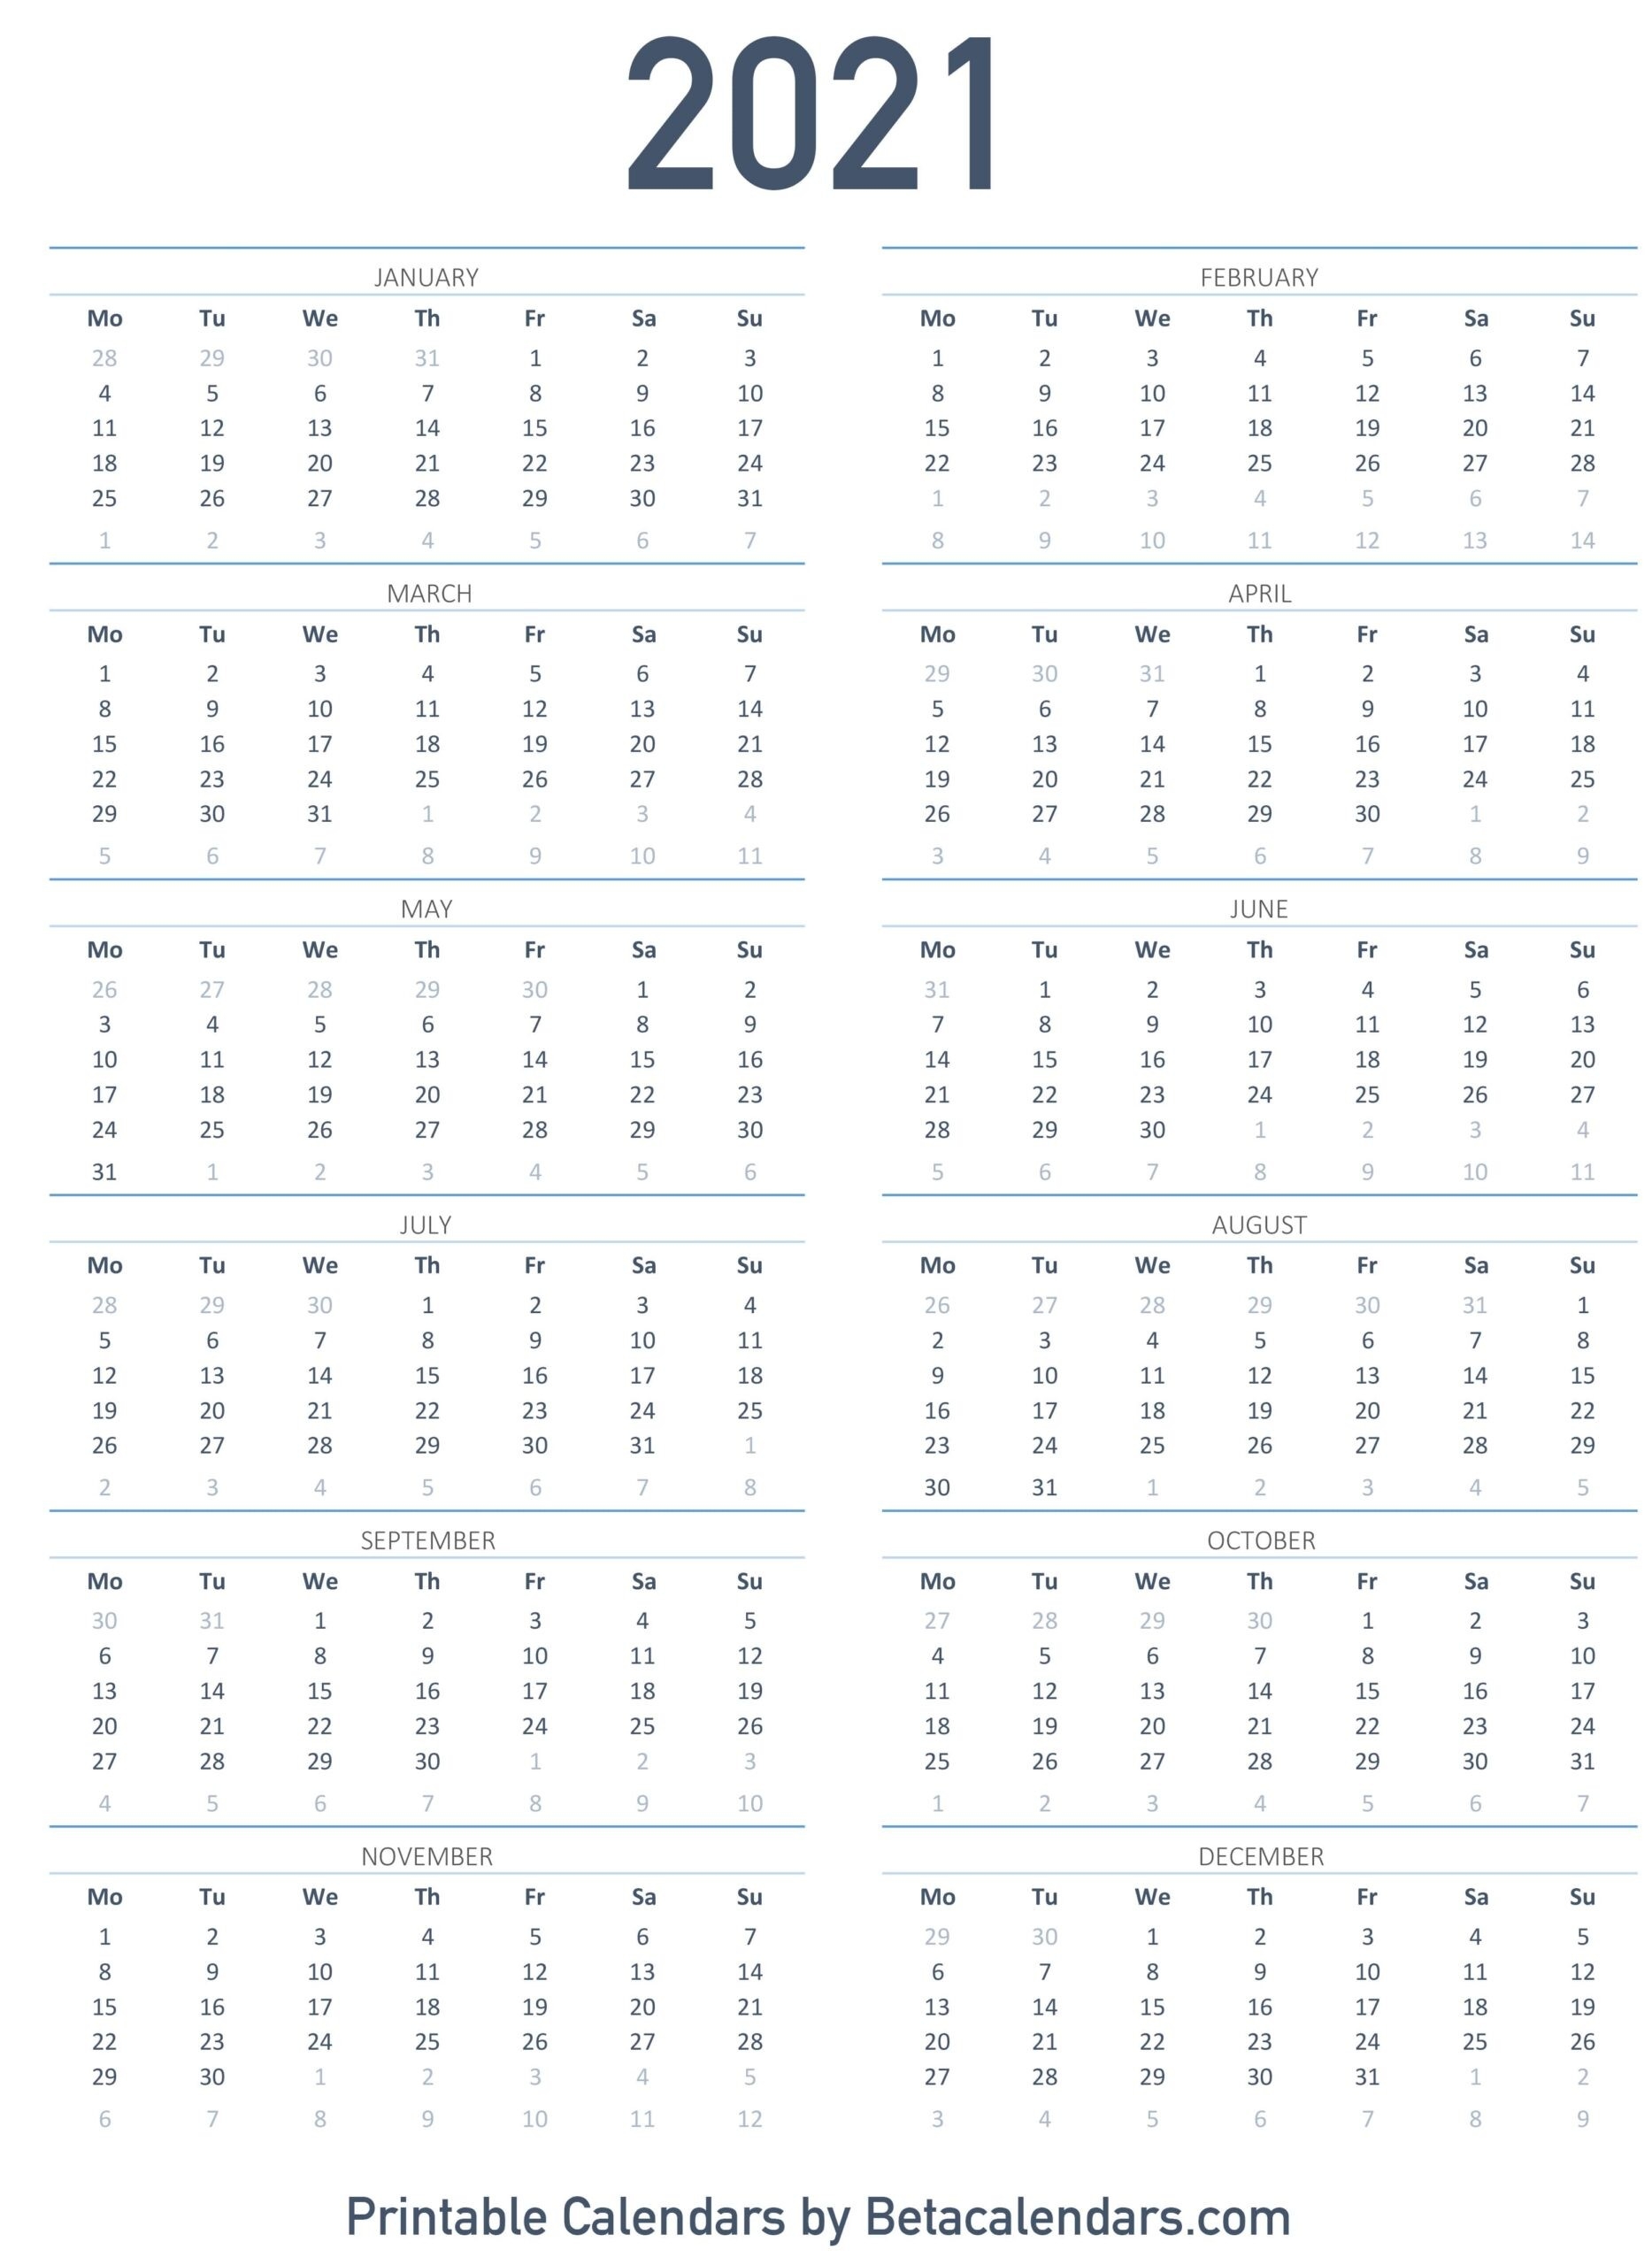 Printable Calendar 2021 | Download &amp; Print Free Blank Calendars  Calendar 2021 With Gregorian Dates